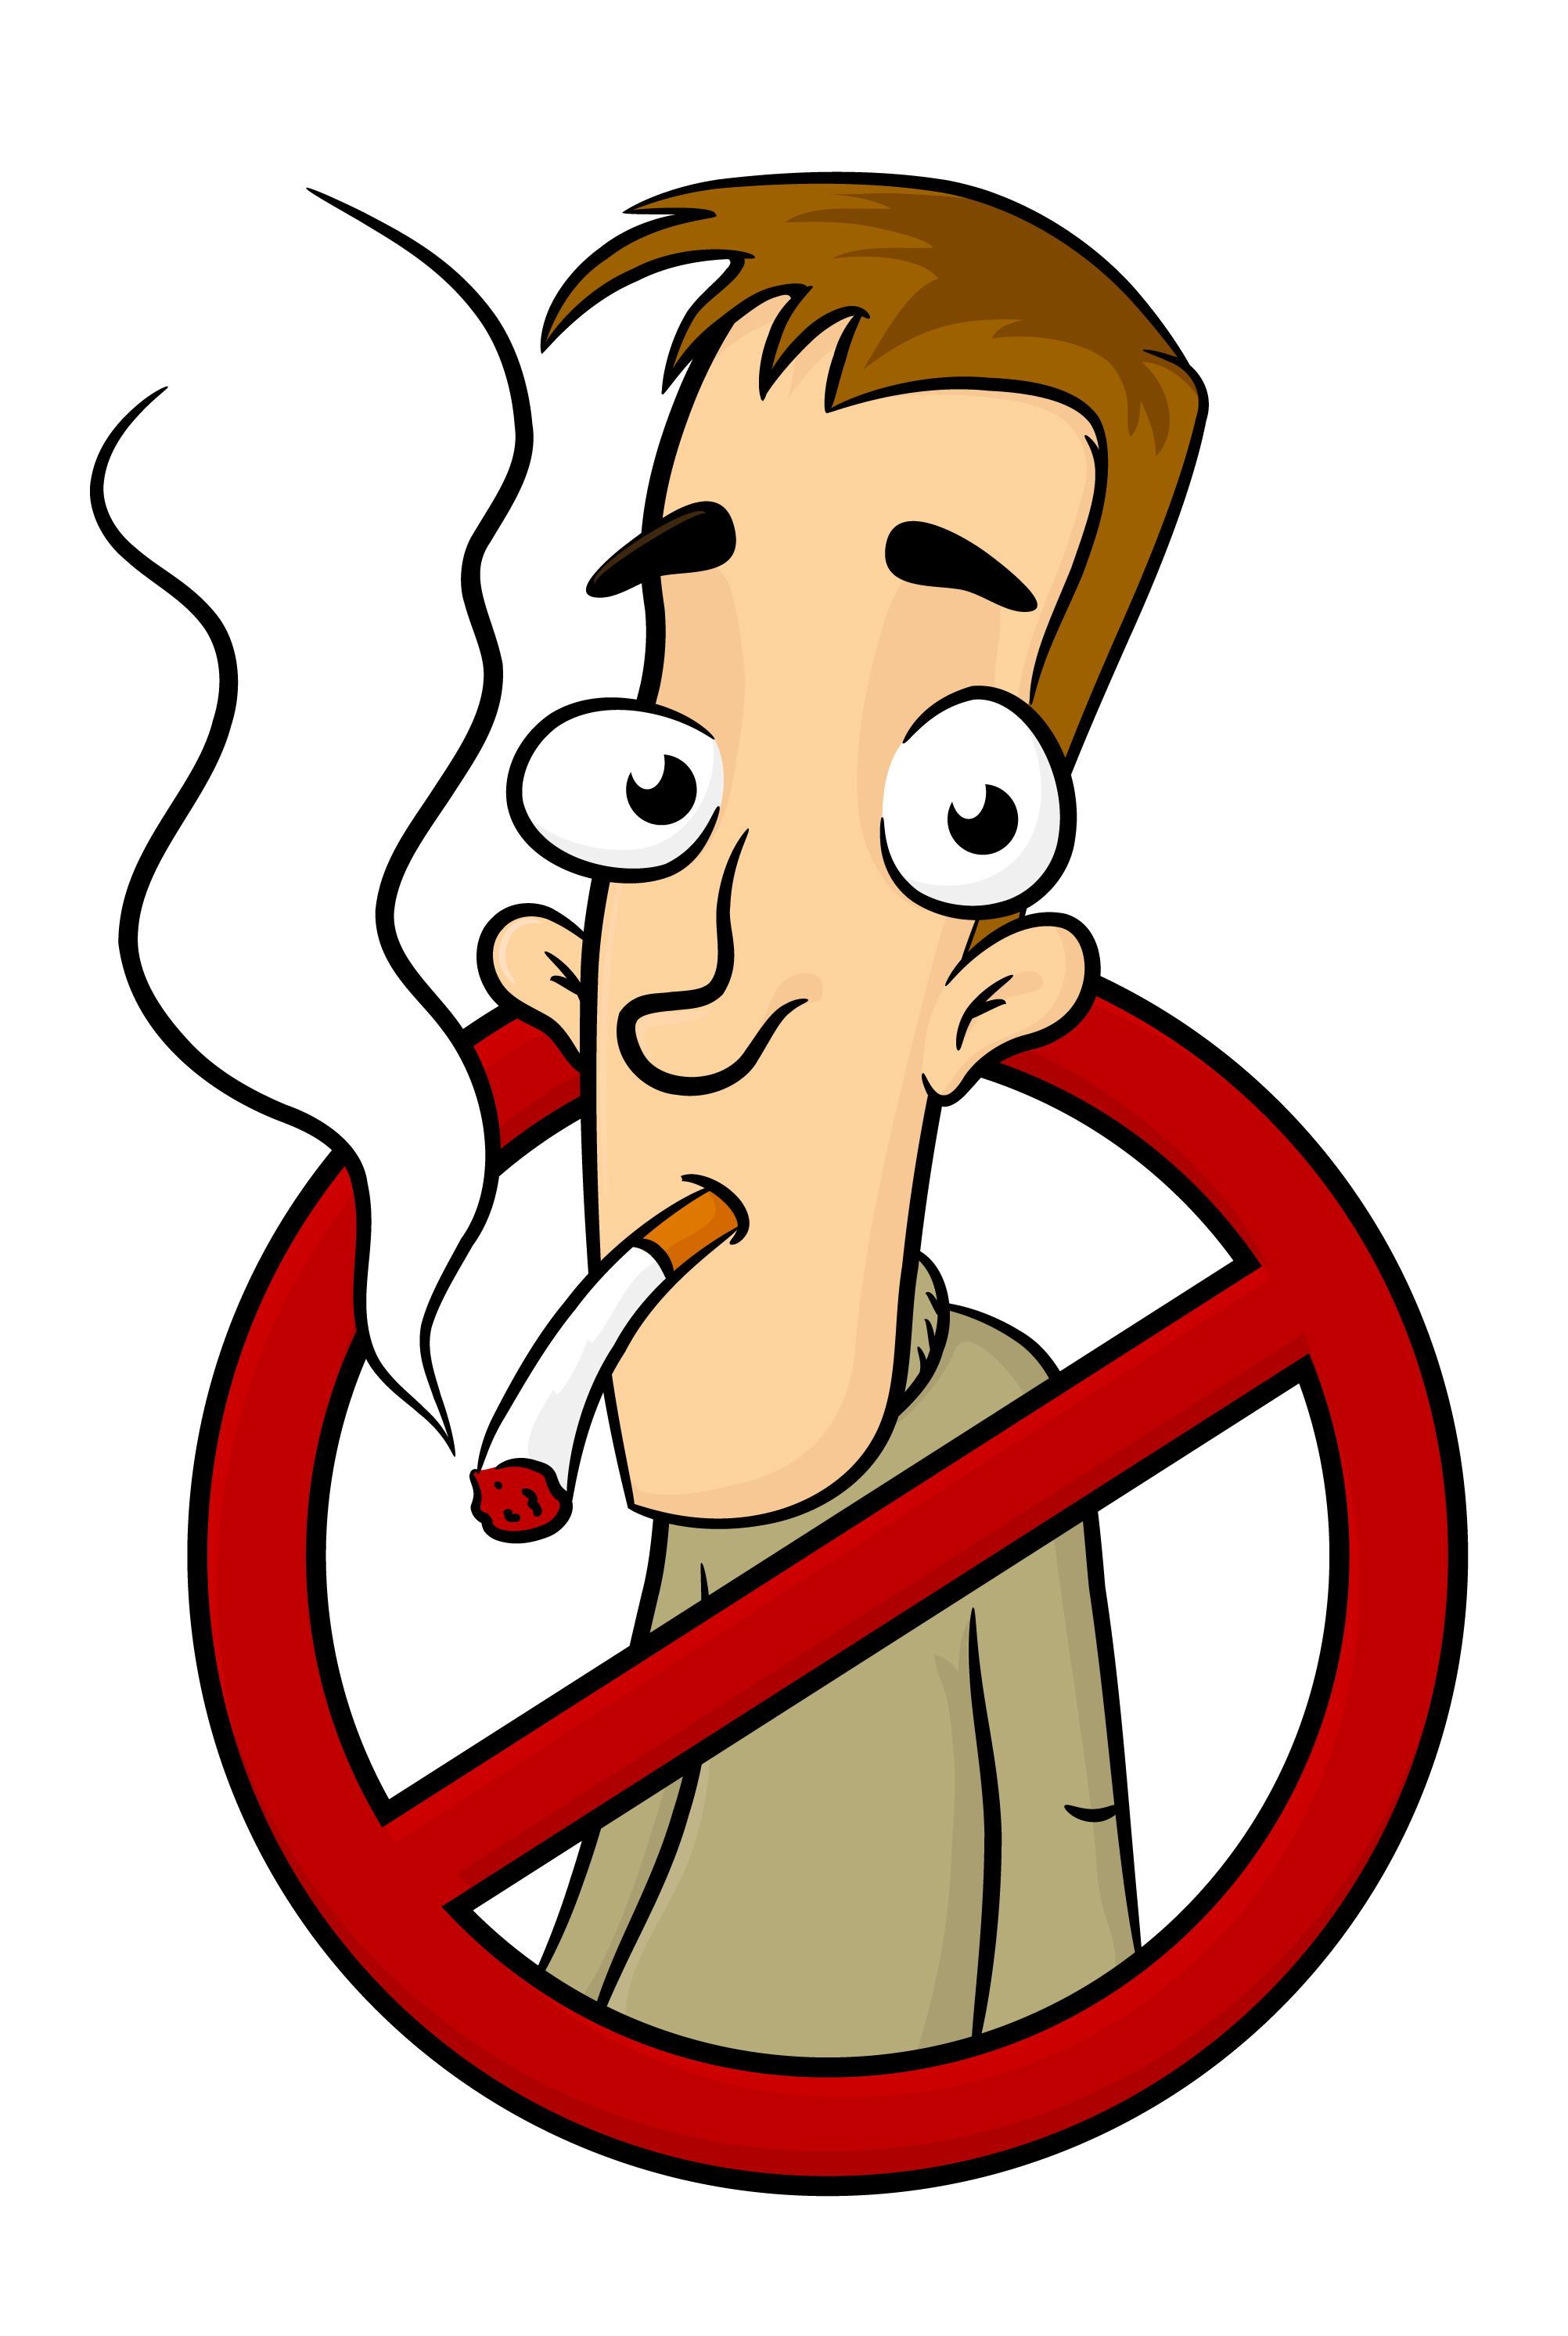 NO SMOKING Cliparts.co